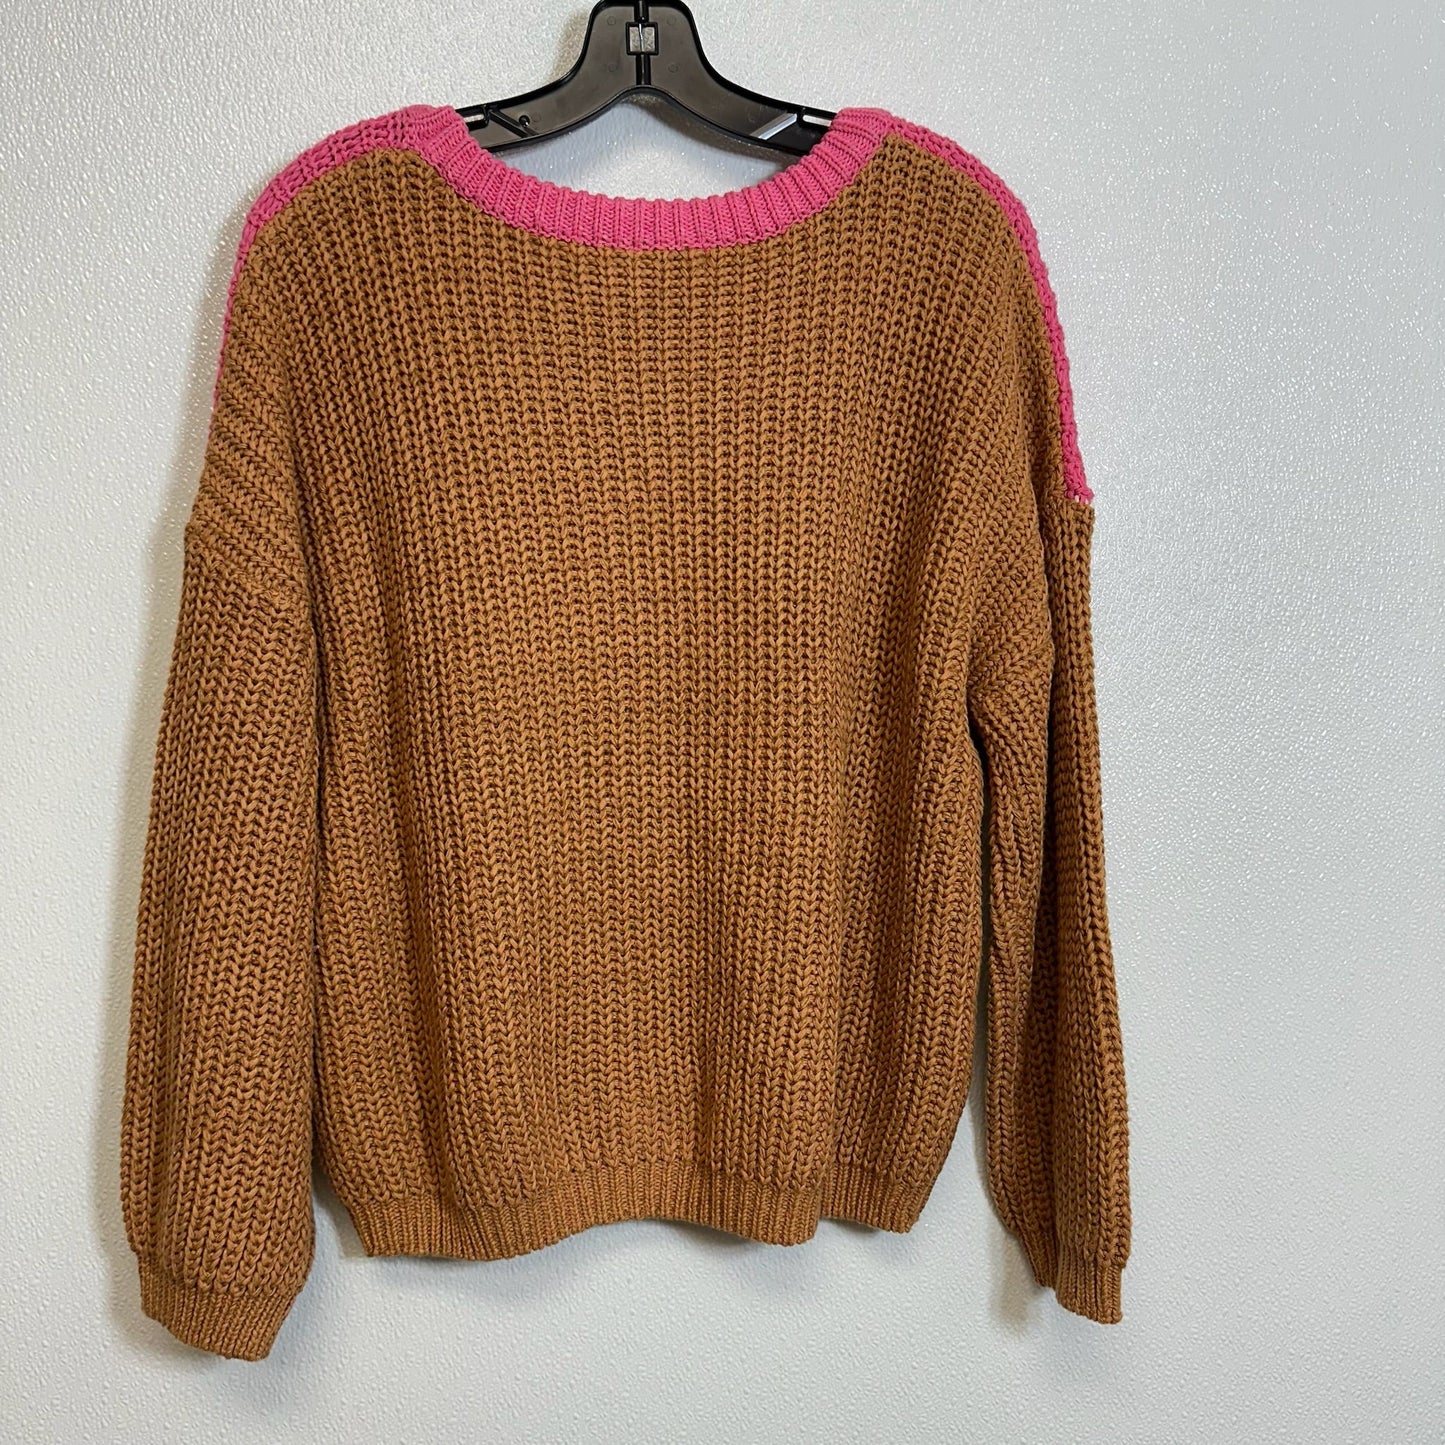 Sweater By Harper  Size: M